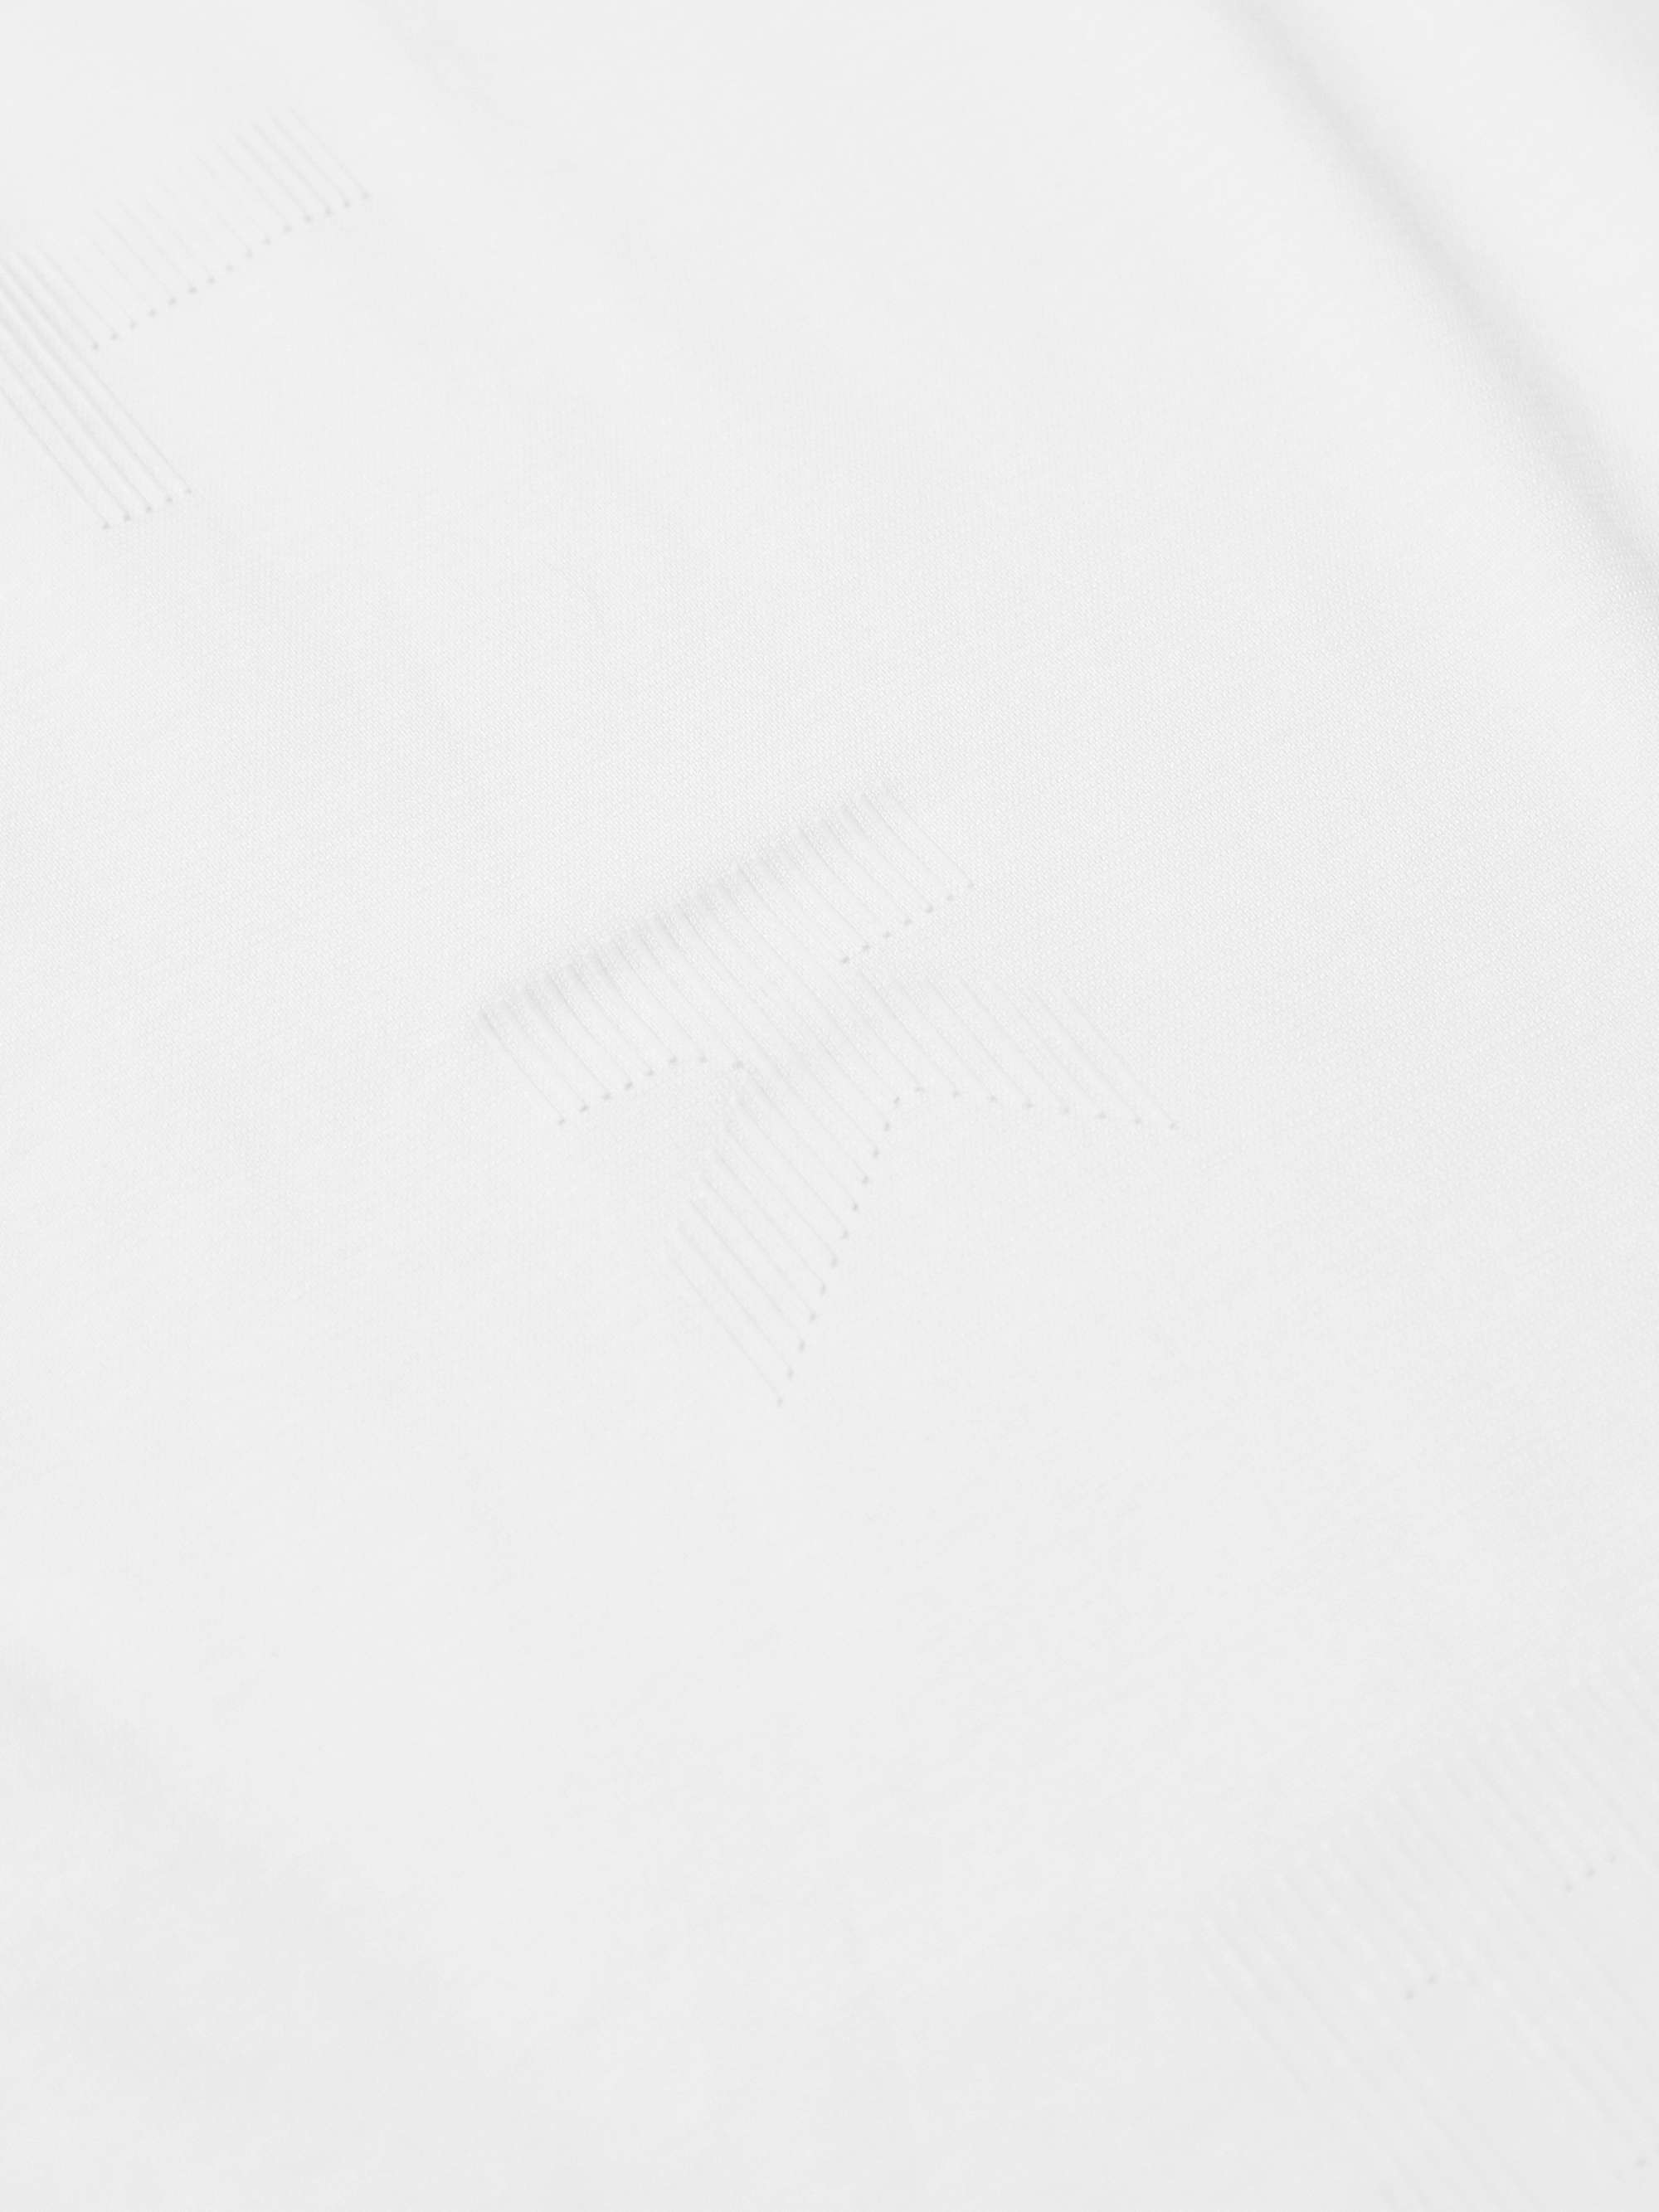 FALKE ERGONOMIC SPORT SYSTEM Printed Lyocell and Cotton-Blend Jersey T-Shirt